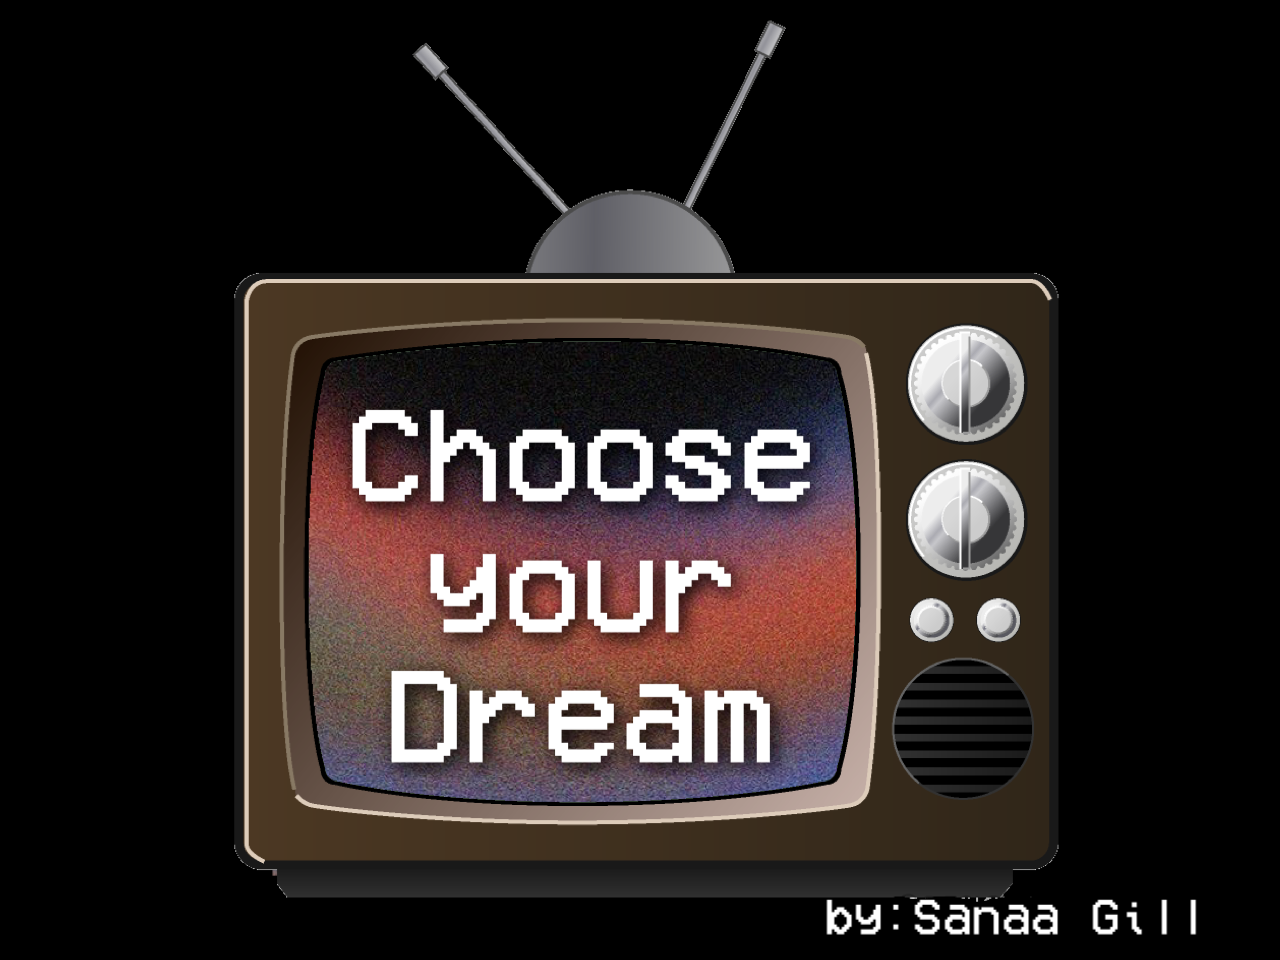 Sanaa Gill's "Choose Your Dream"